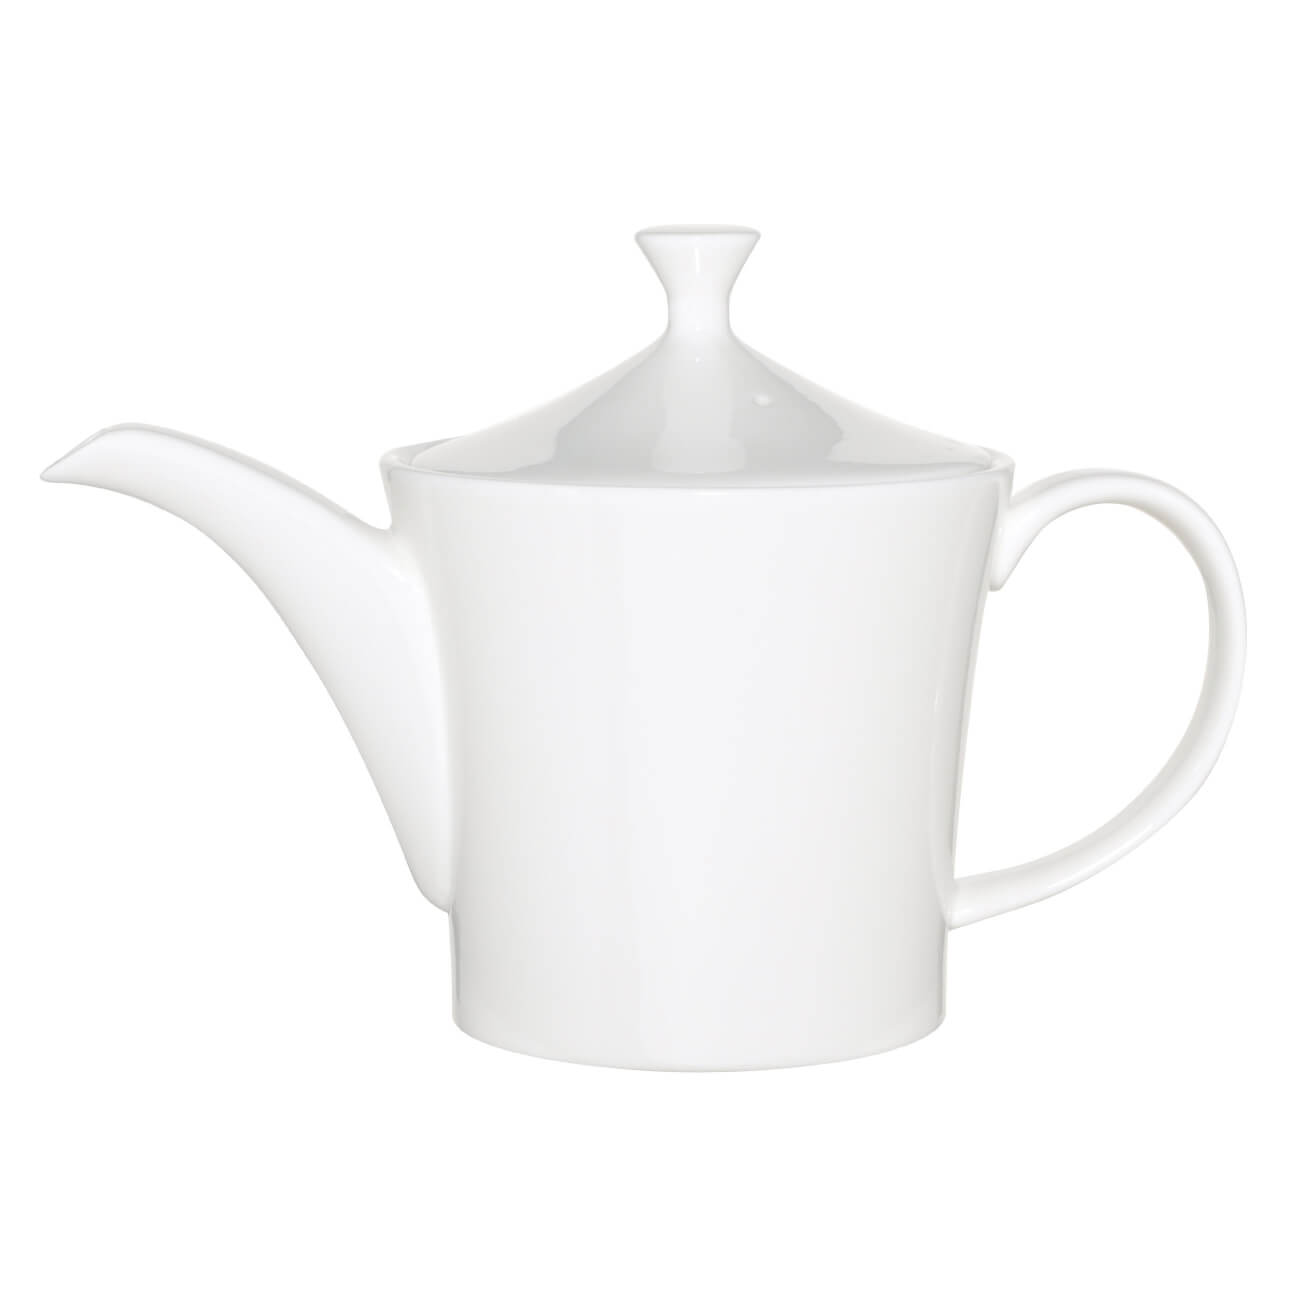 Чайник заварочный, 800 мл, фарфор F, белый, Ideal white заварочный чайник zeidan z 4318 1000 мл